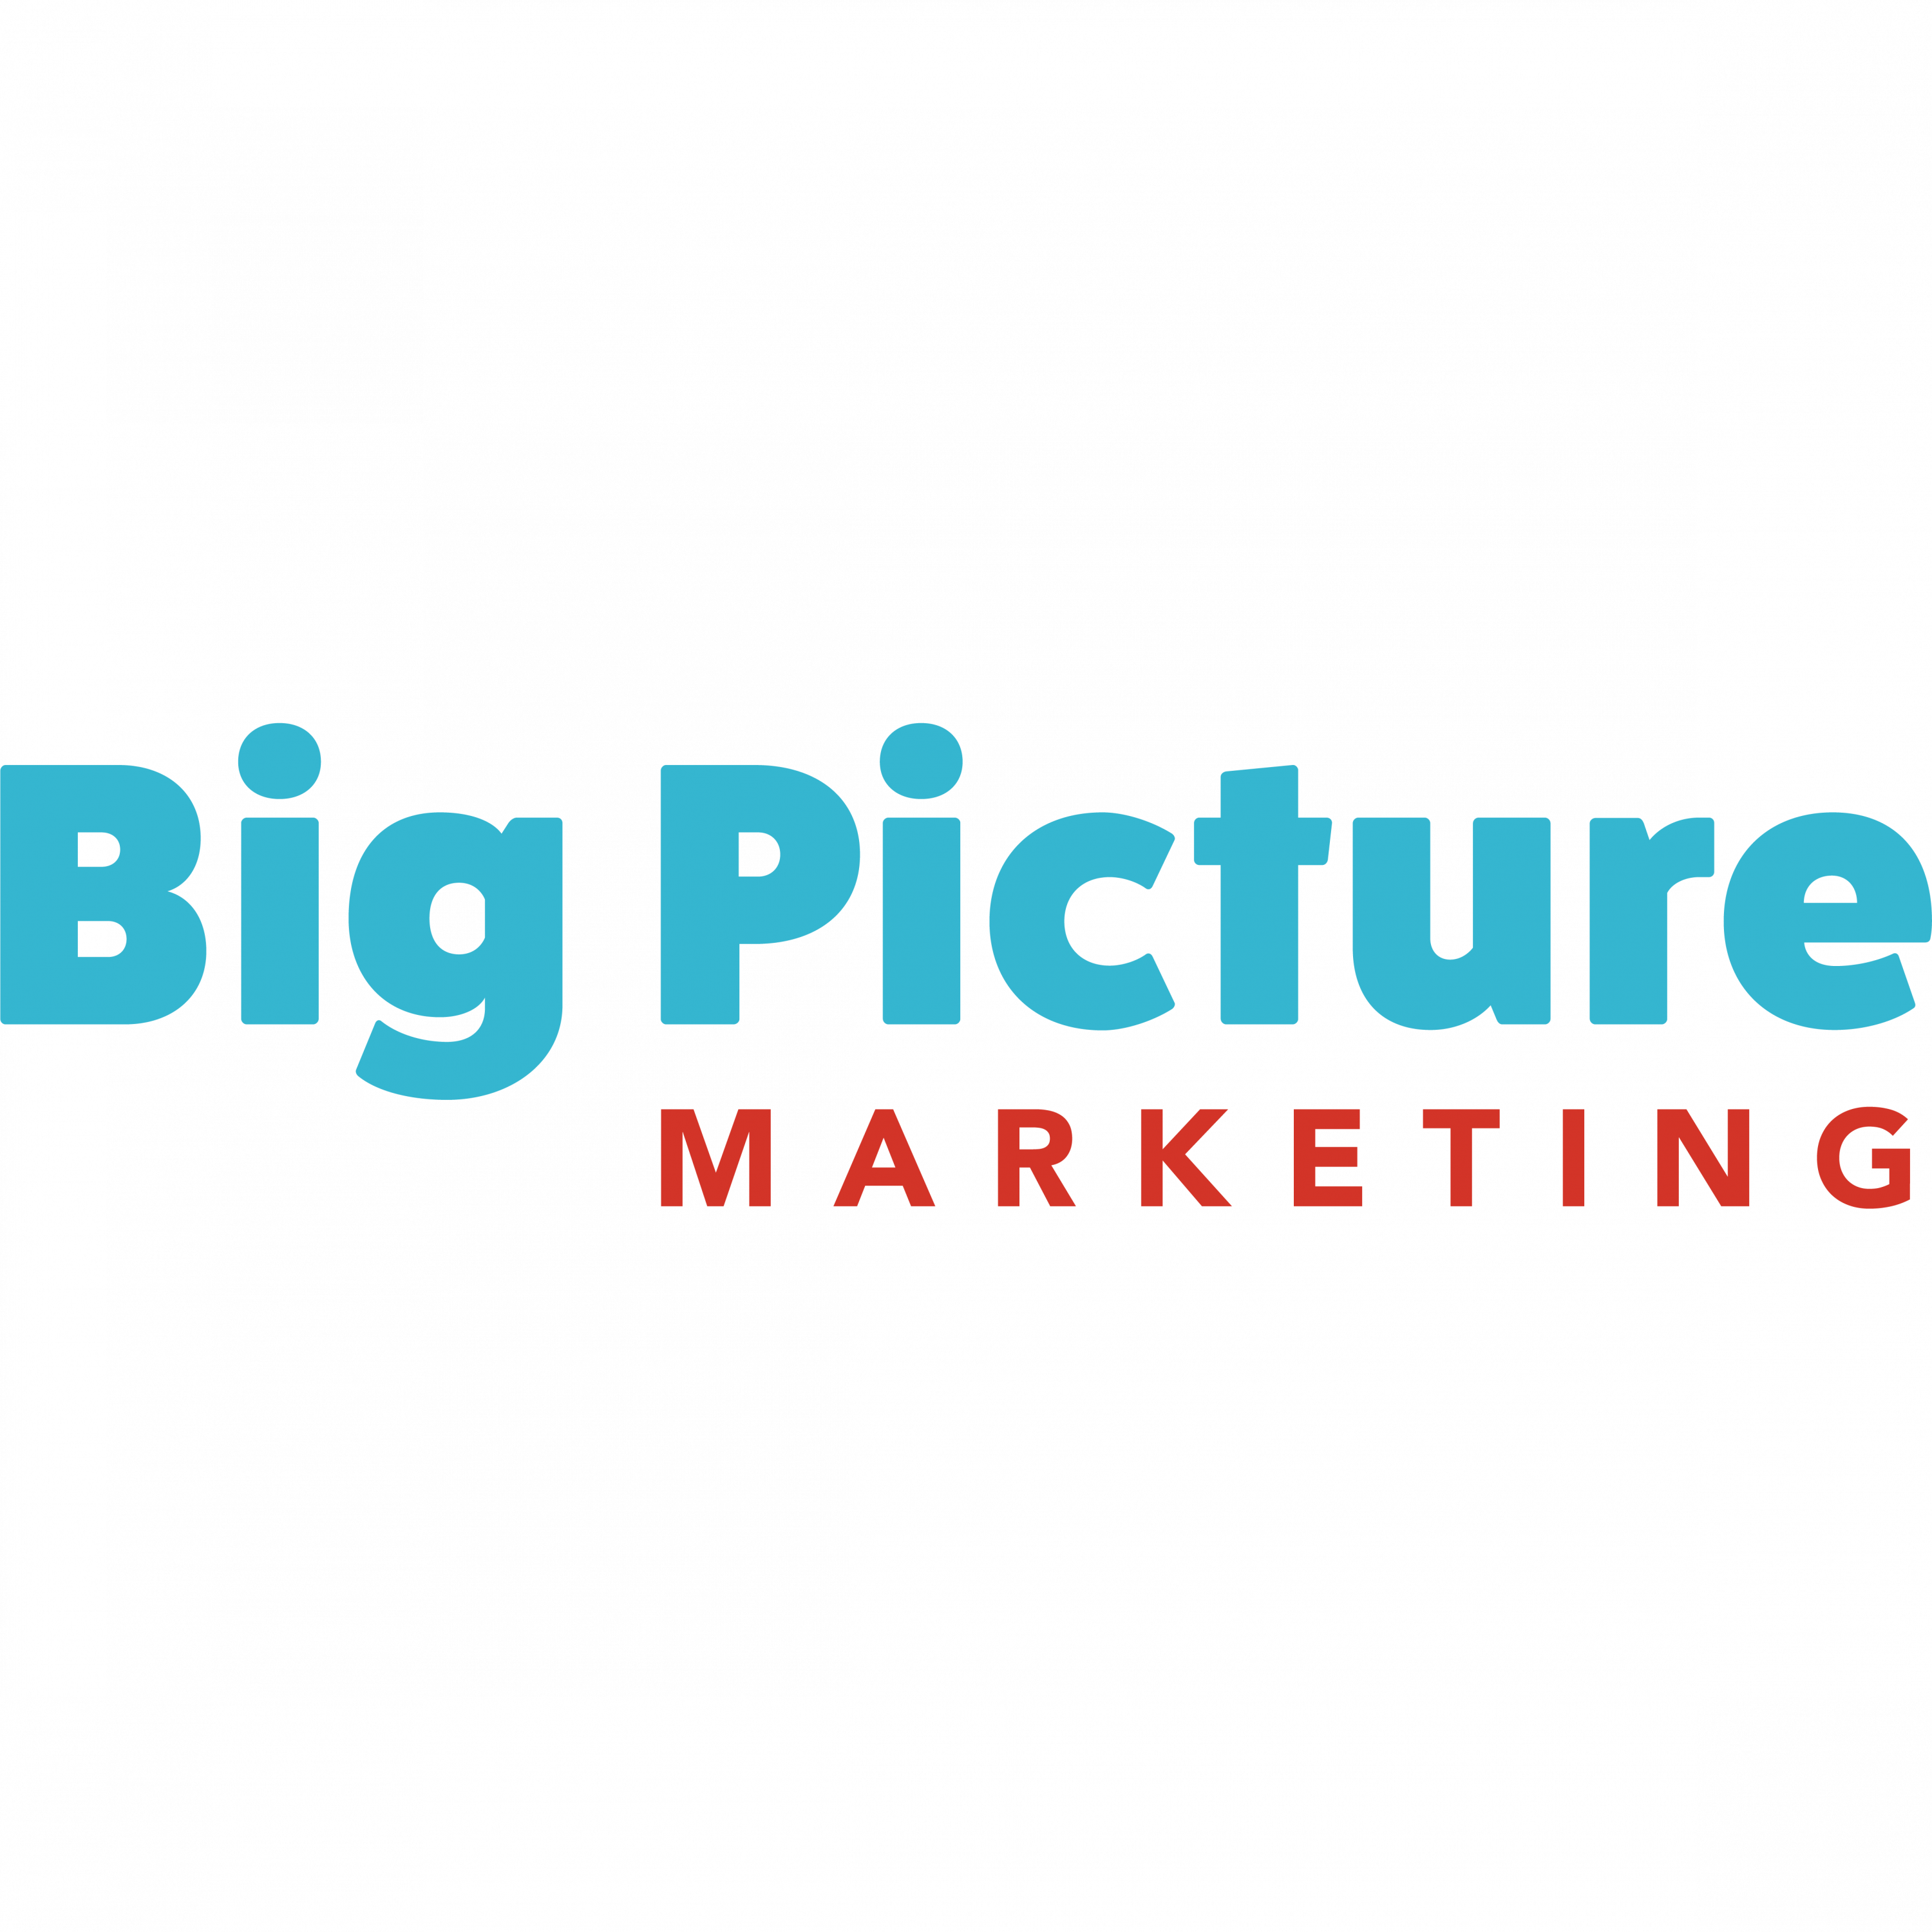 Big Picture Marketing